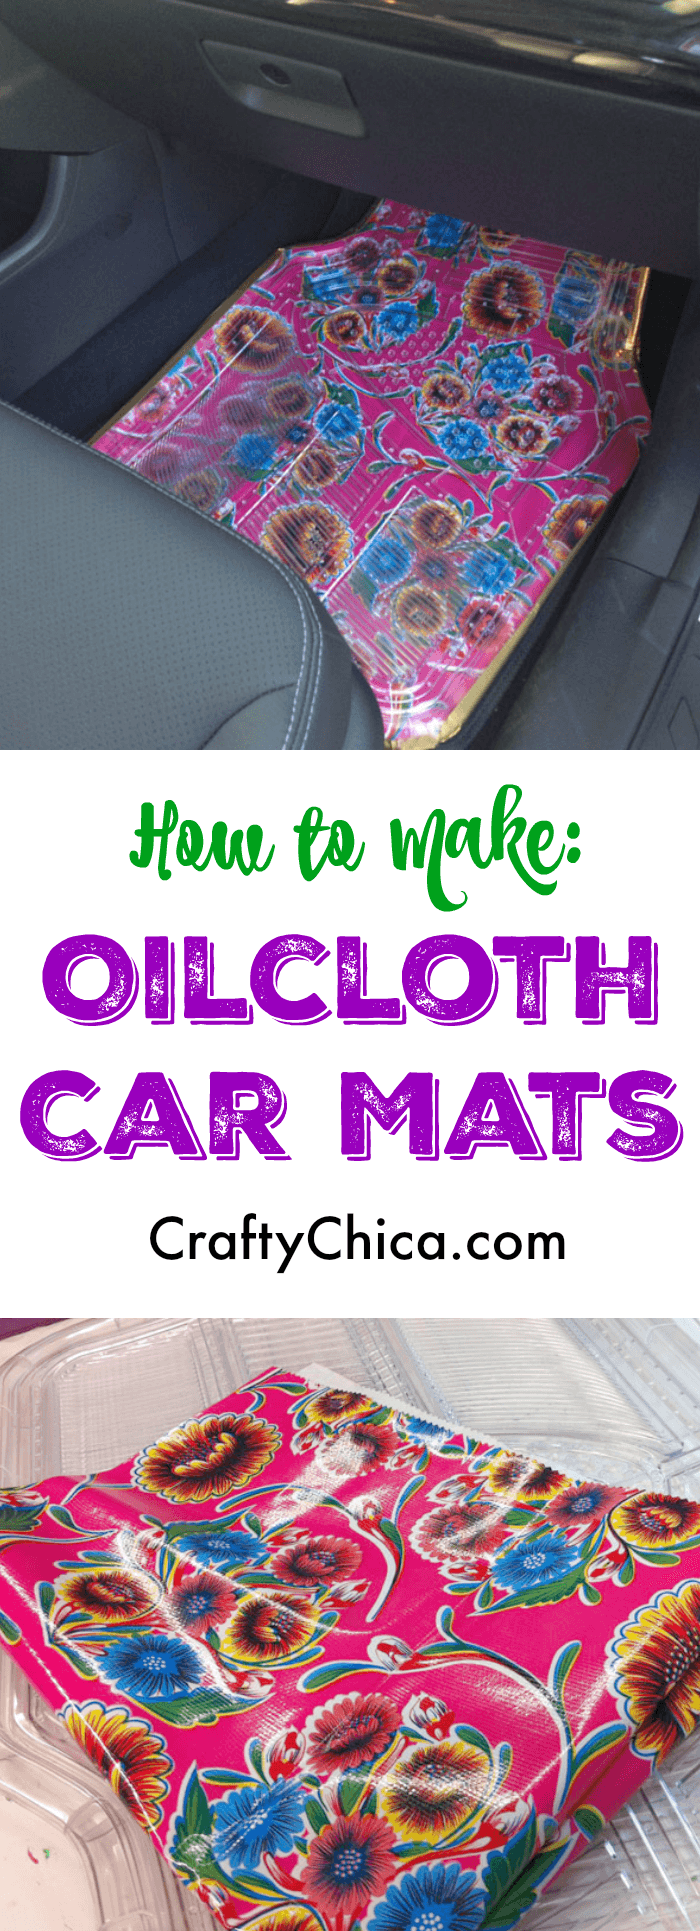 Make oilcloth car mats